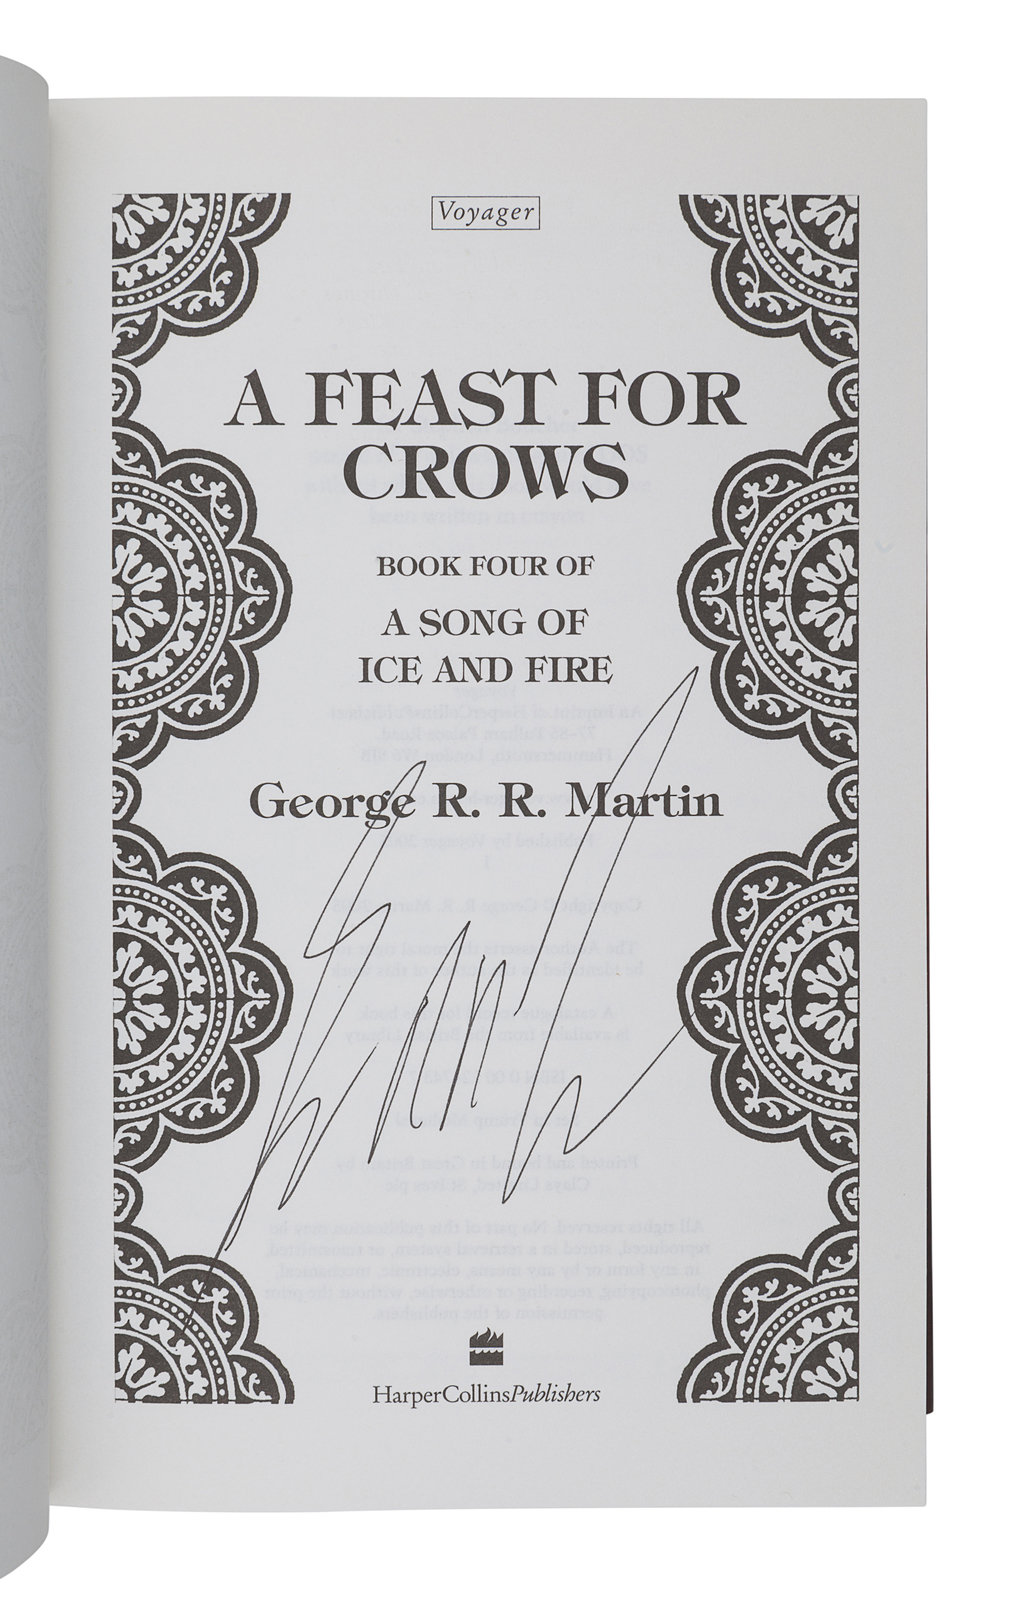 George R. R. Martin – HarperCollins Publishers